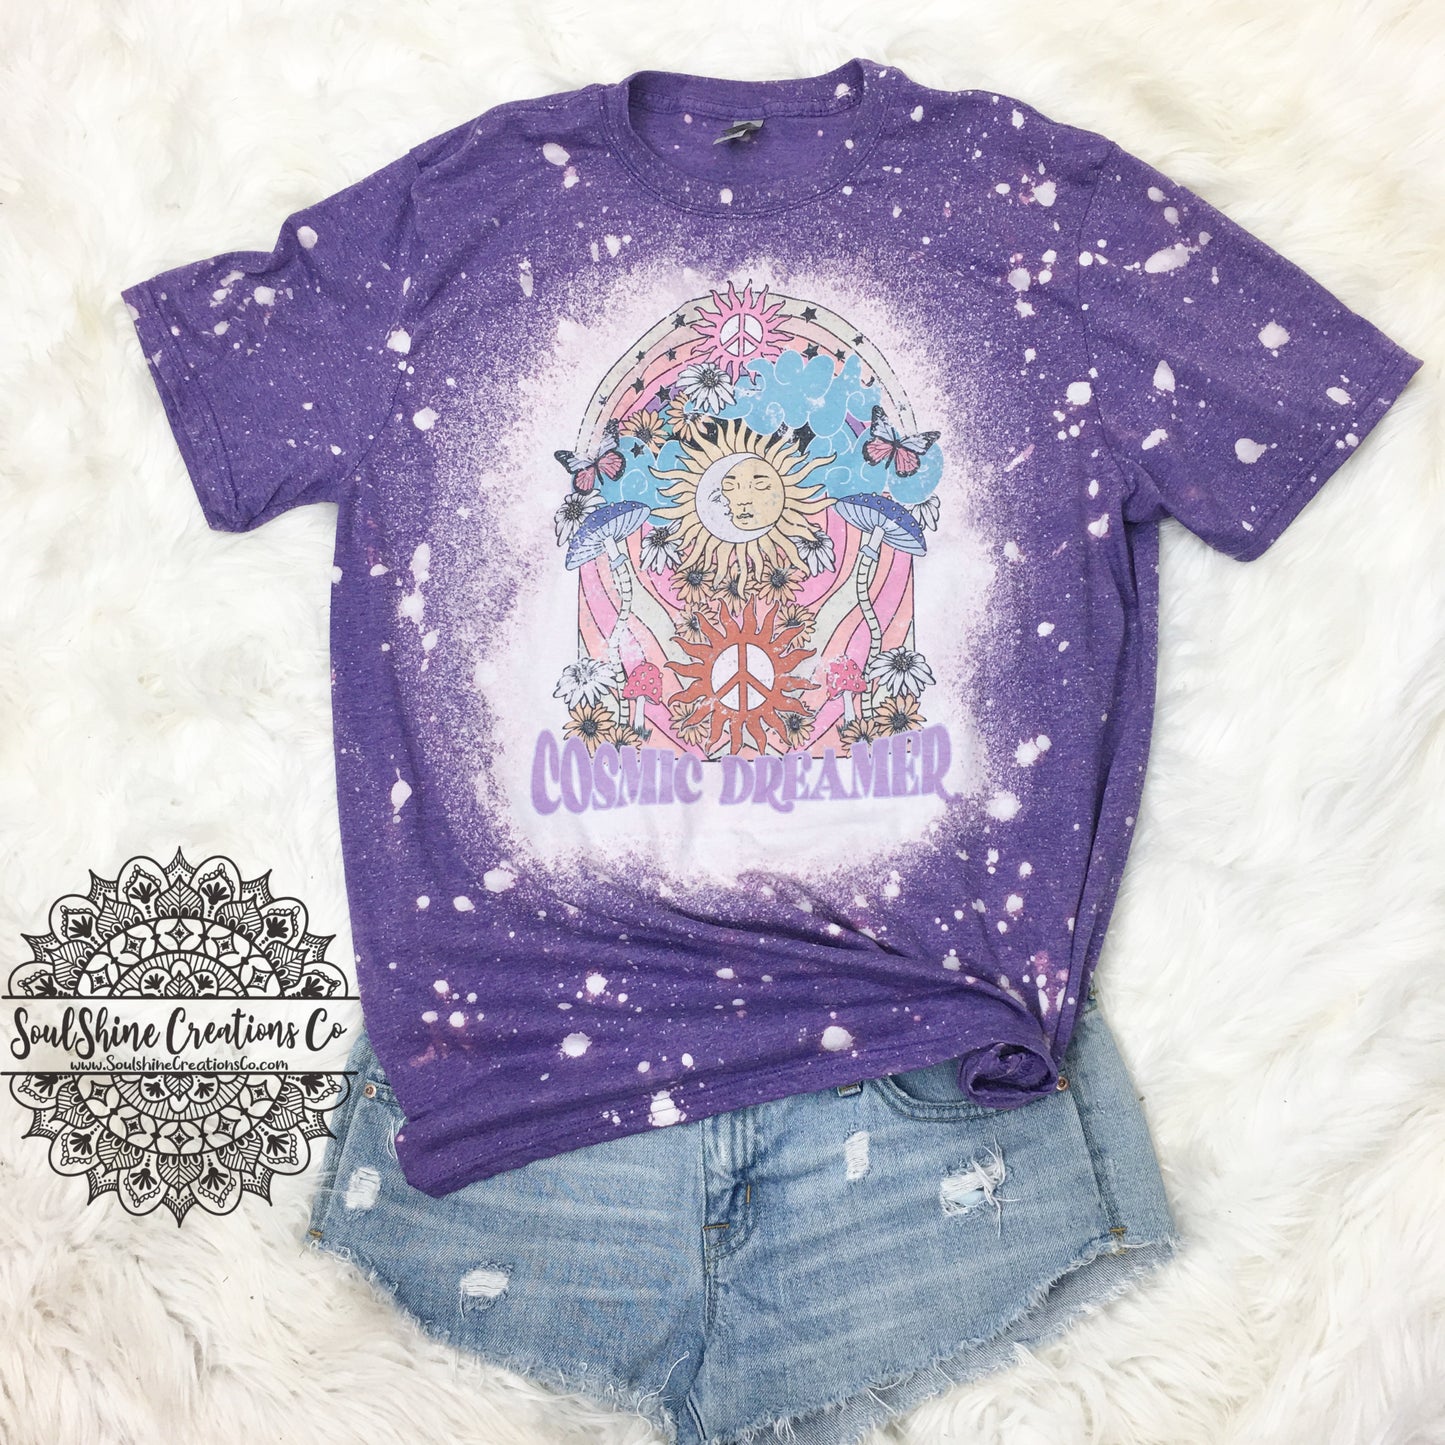 Cosmic Dreamer Bleached Shirt